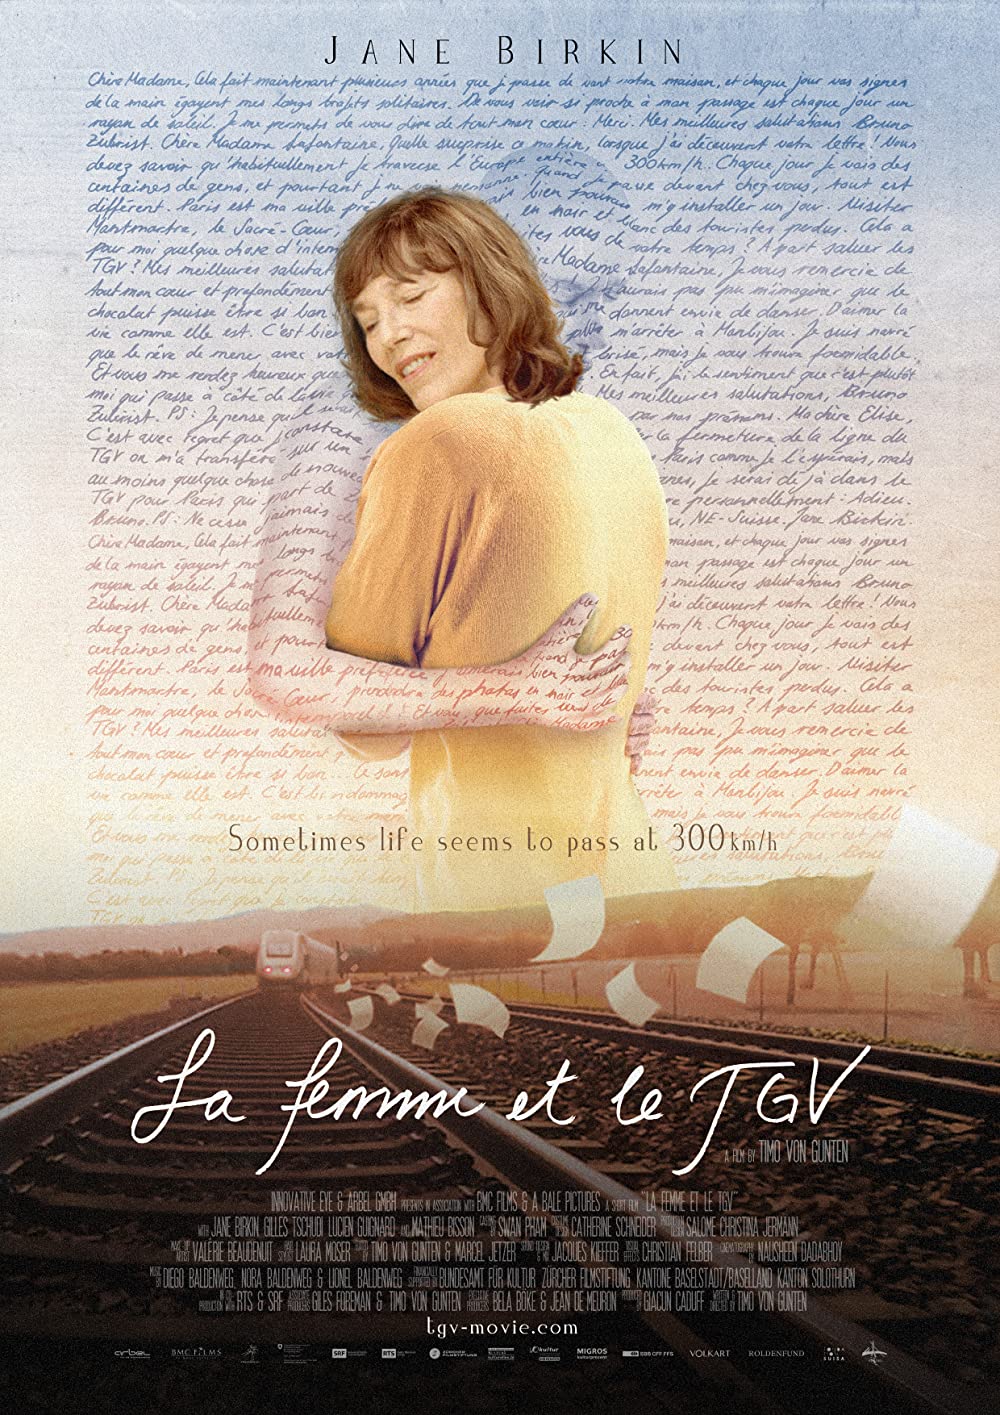 Filmbeschreibung zu La femme et le TGV